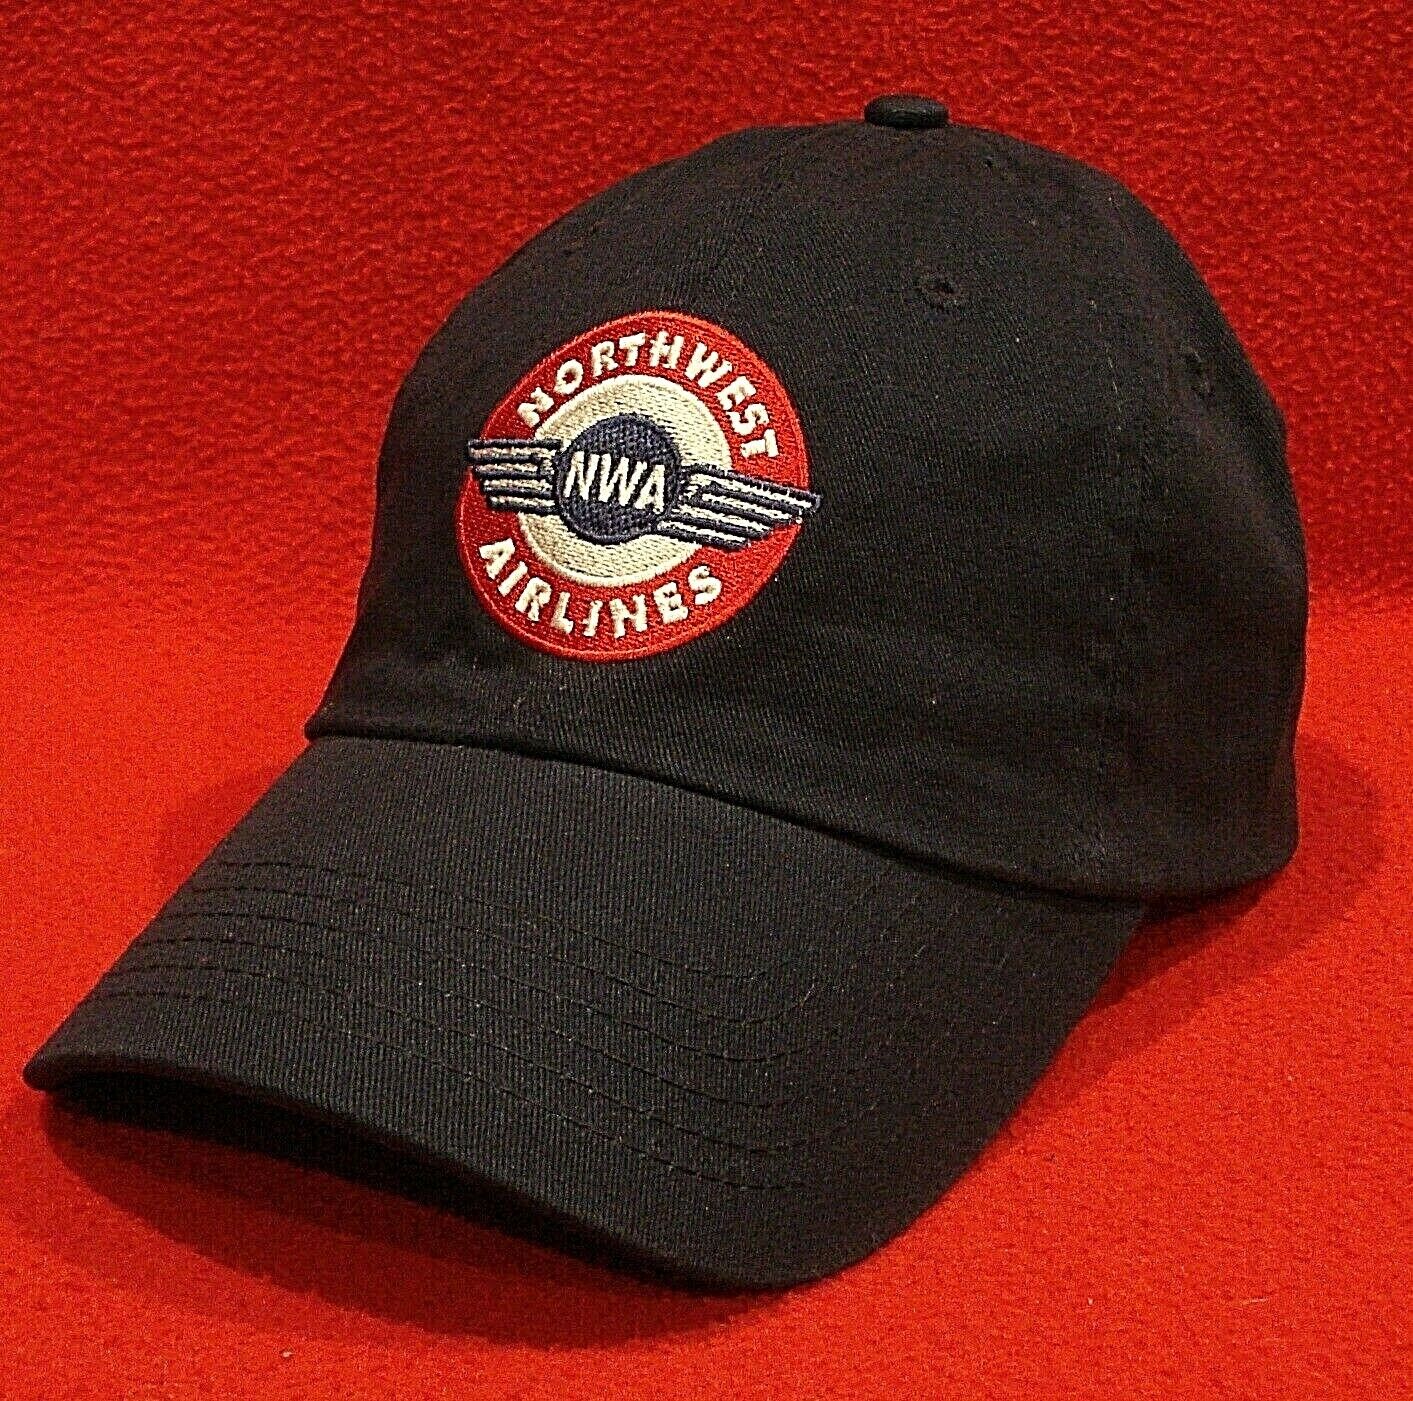 Northwest Airlines Retro 1941 Logo ball cap, low-profile cotton hat - navy-blue